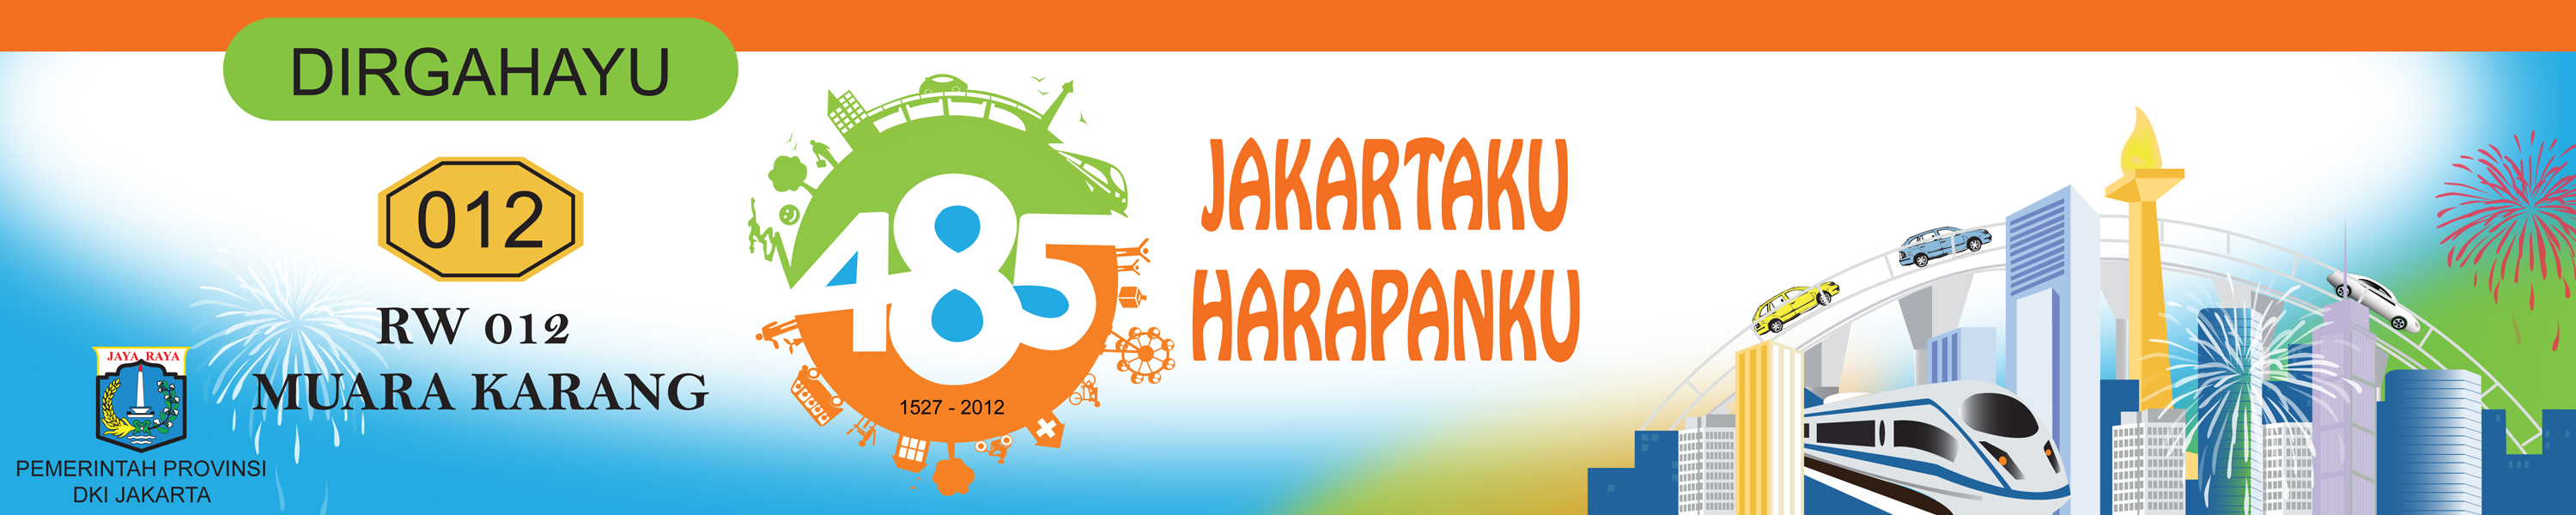 Banner Dirgahayu Jakarta RW 012 Muara Karang